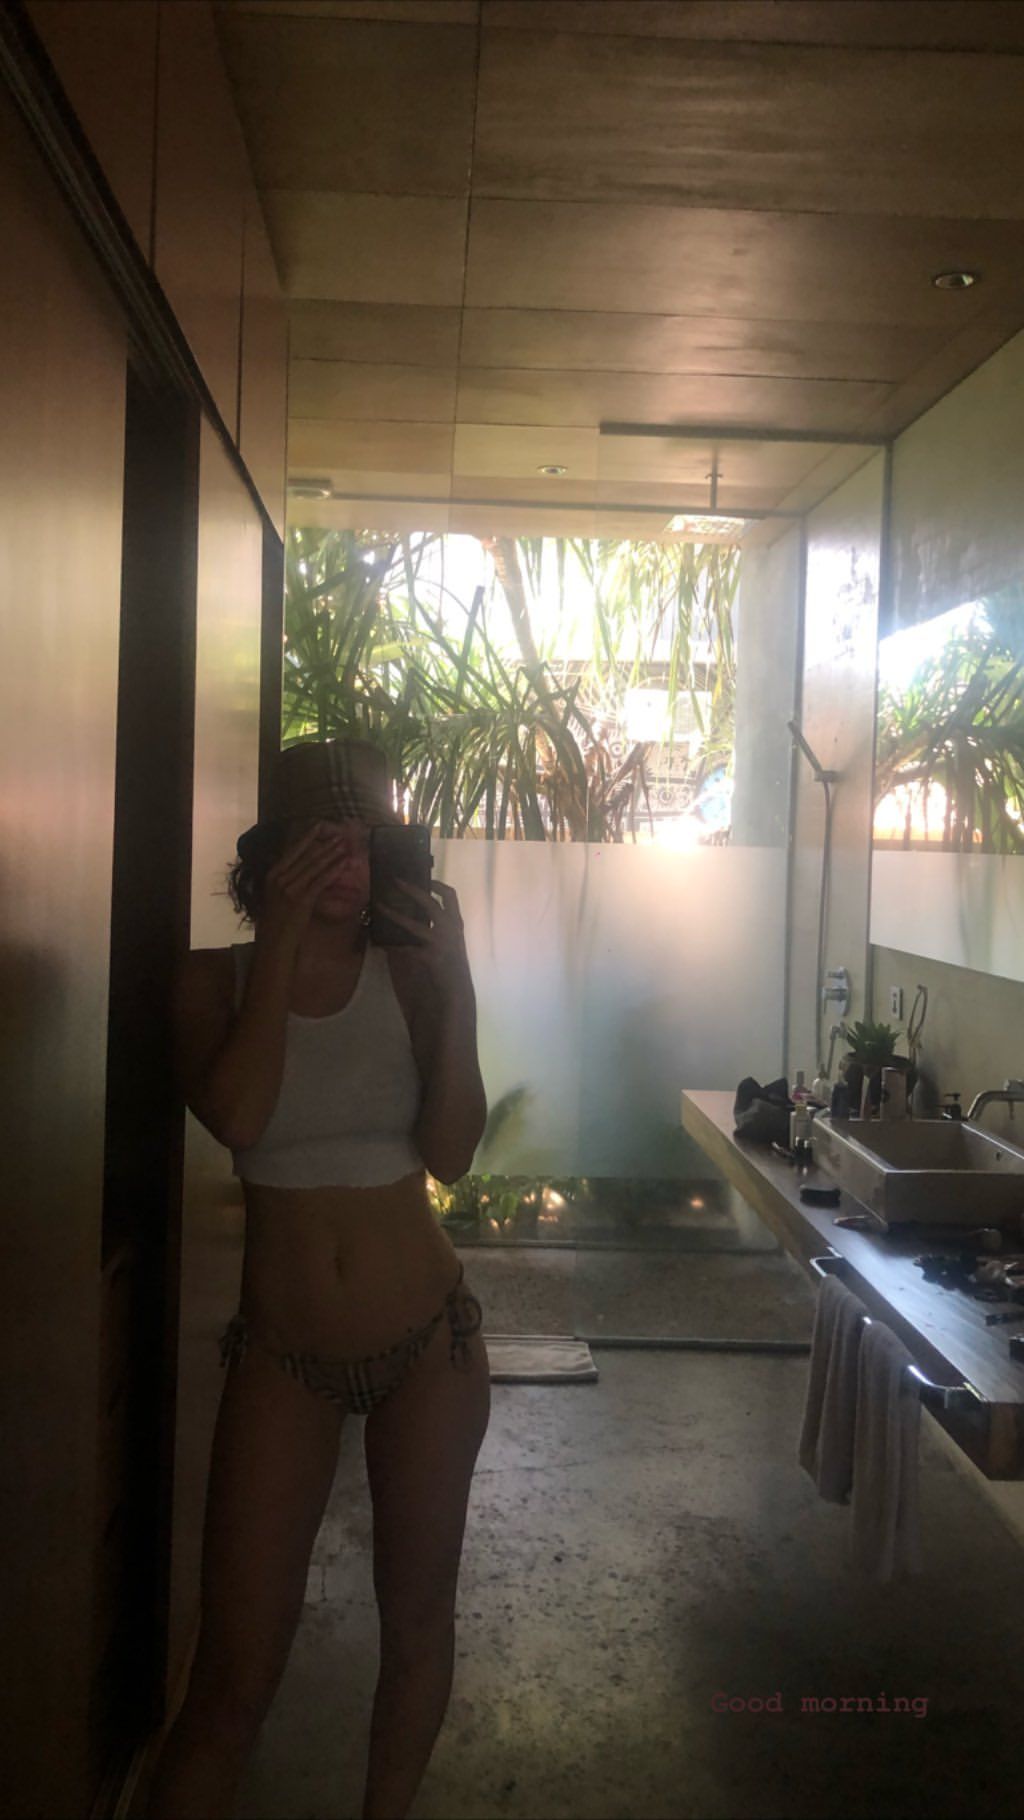 Charli XCX’s Tits on Instagram (12 Pics + GIFs)